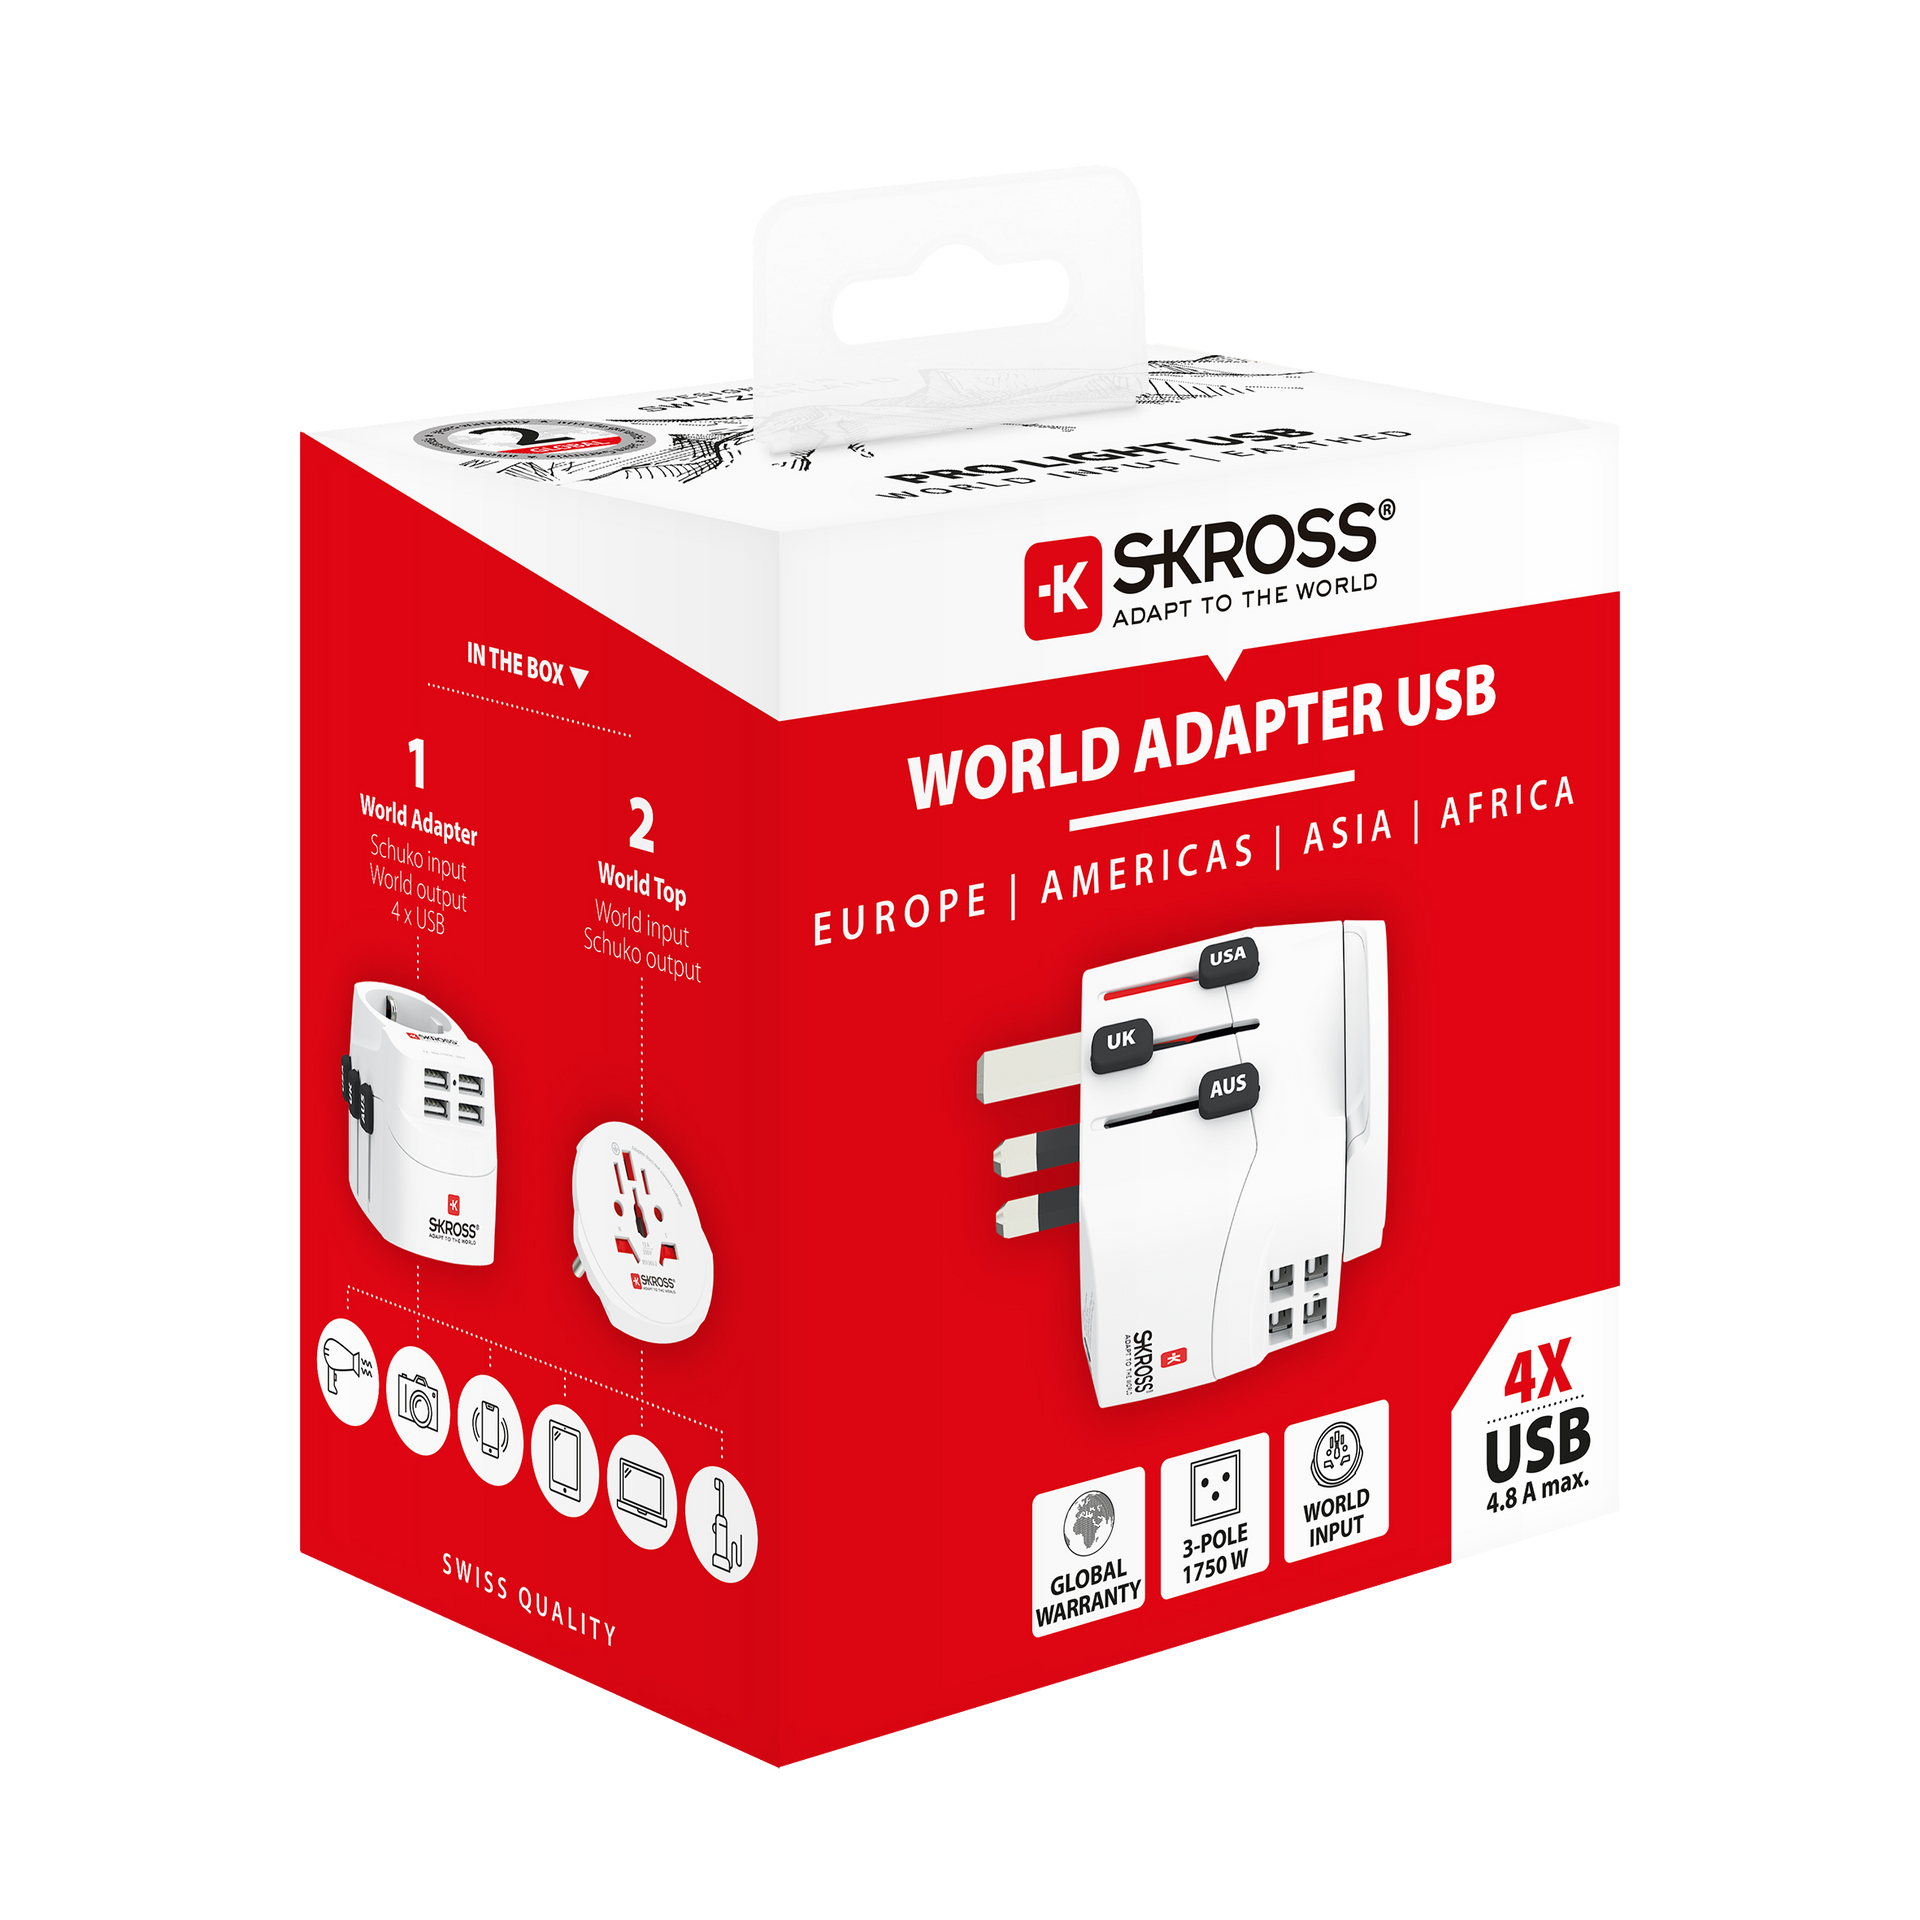 Skross 3-Pole PRO Light USB 4xA - World Travel Adapter Packaging